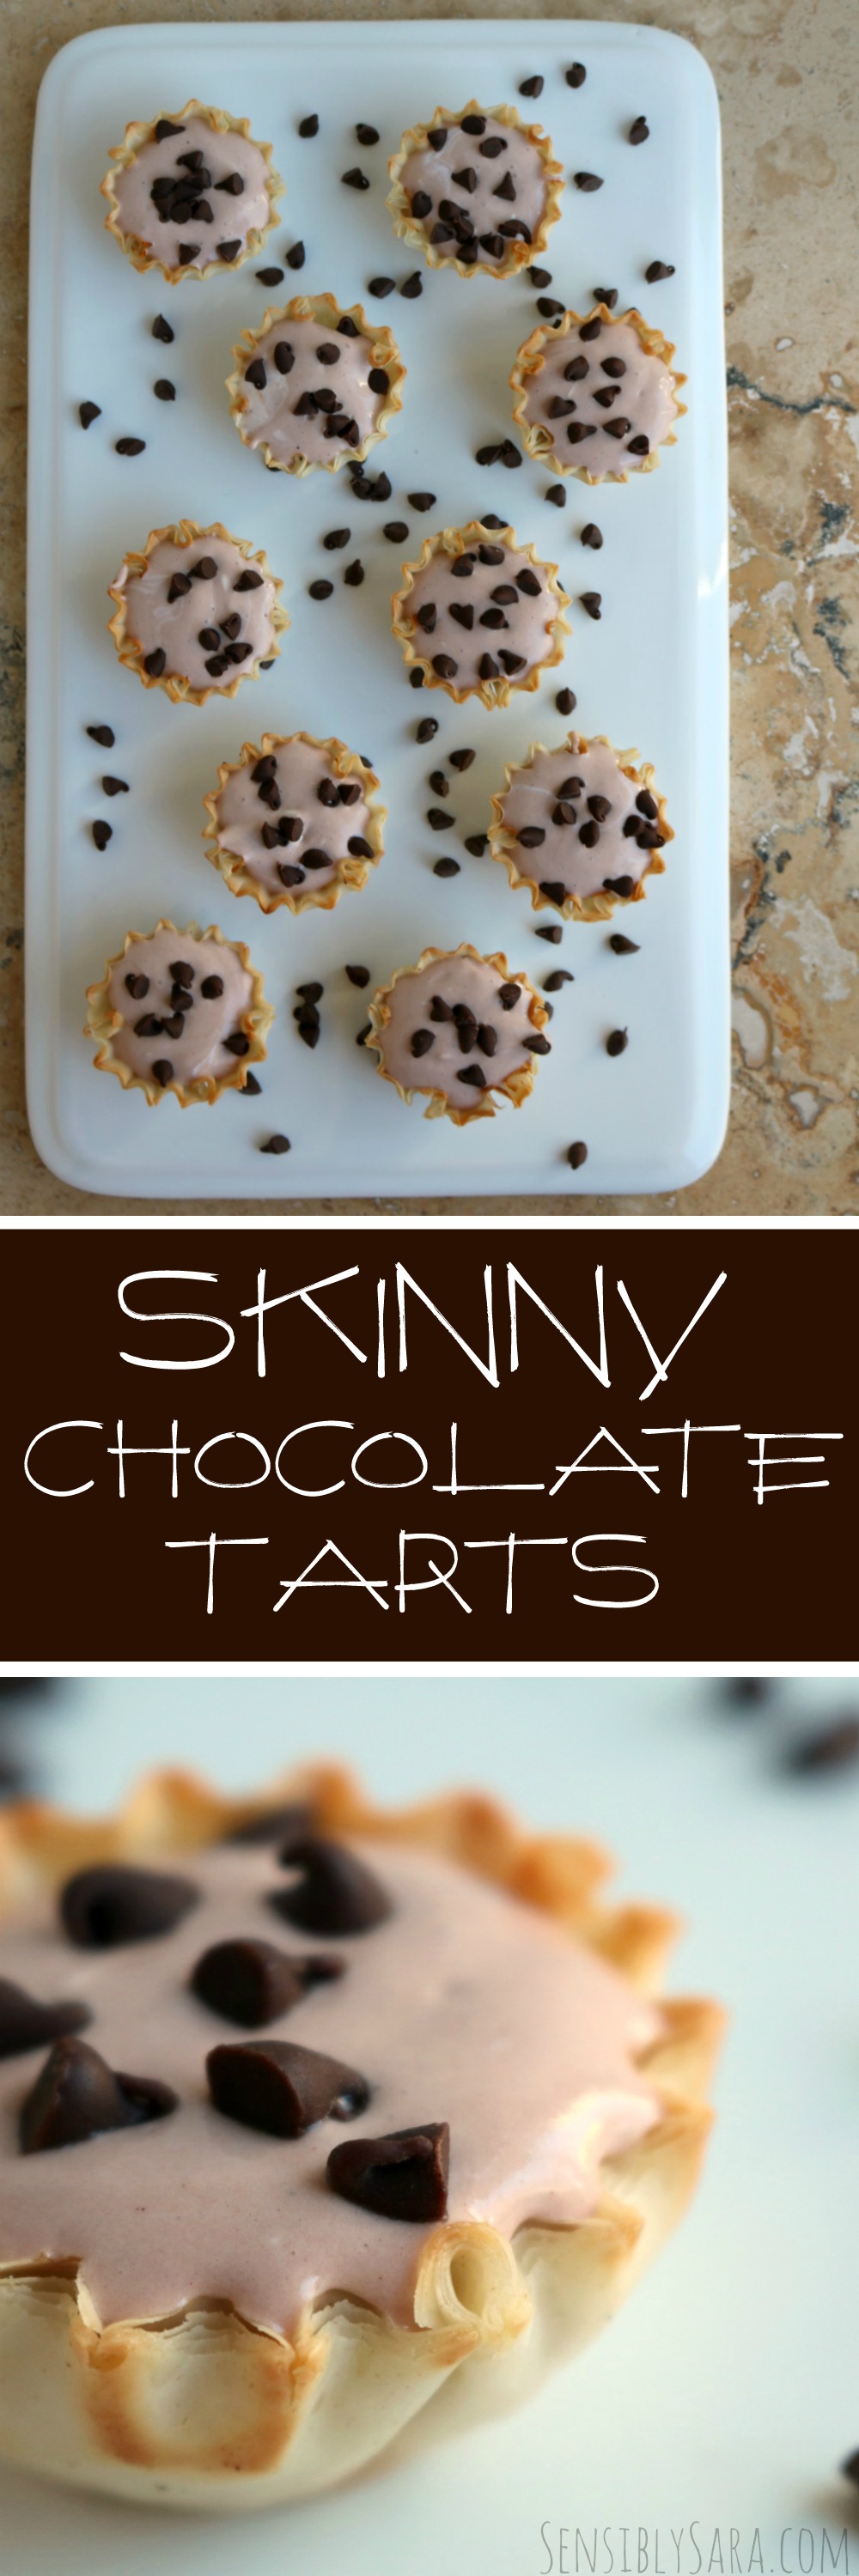 Skinny Chocolate Tarts | SensiblySara.com